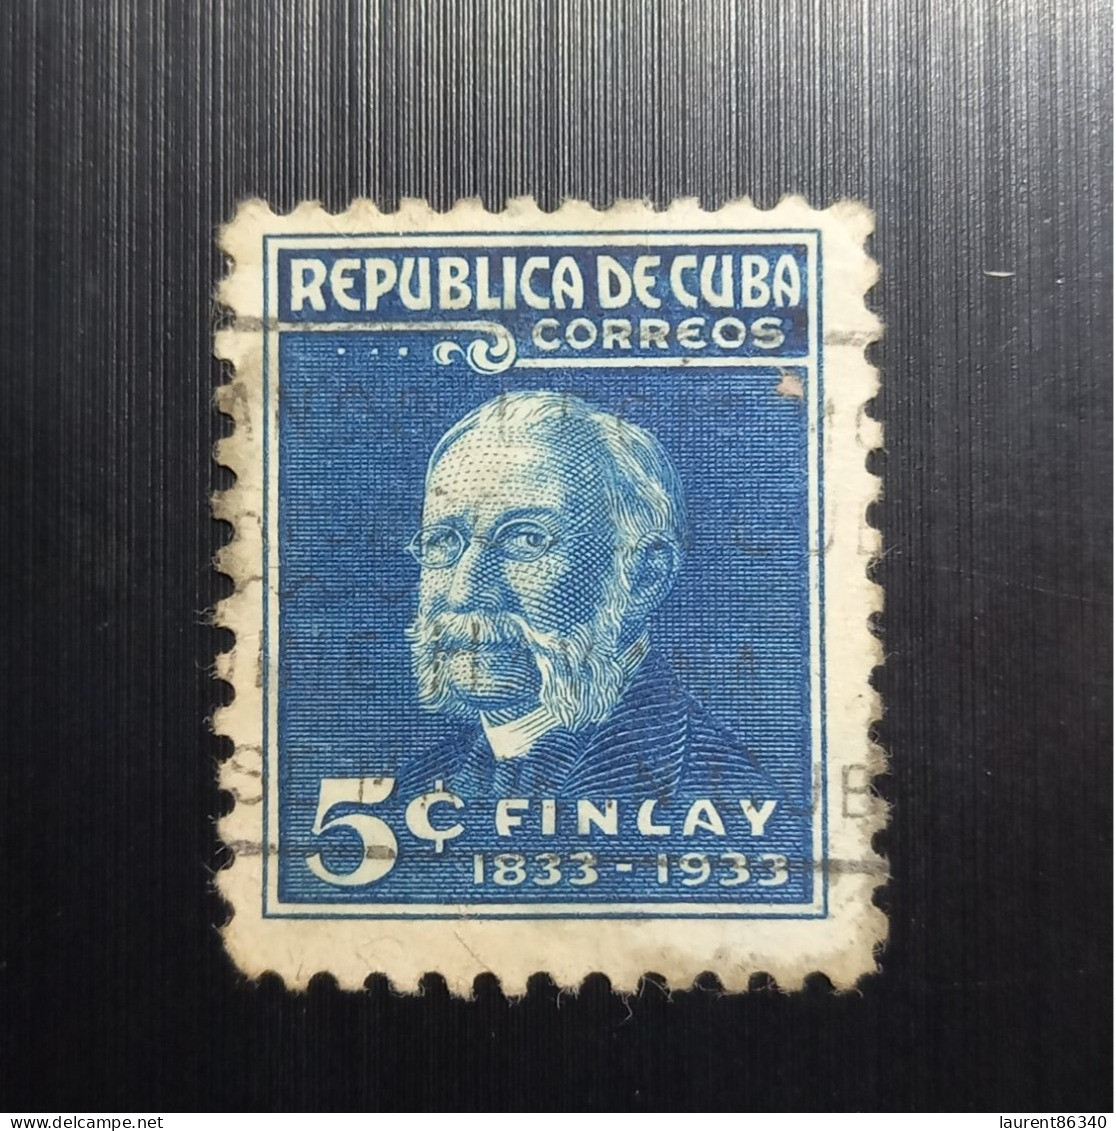 Cuba –  Lot 4 Timbres 1934 à 1954 – Politiciens, Poste Aérienne ’’Matanzas ‘’ , American Democracy & Patriots - Usados